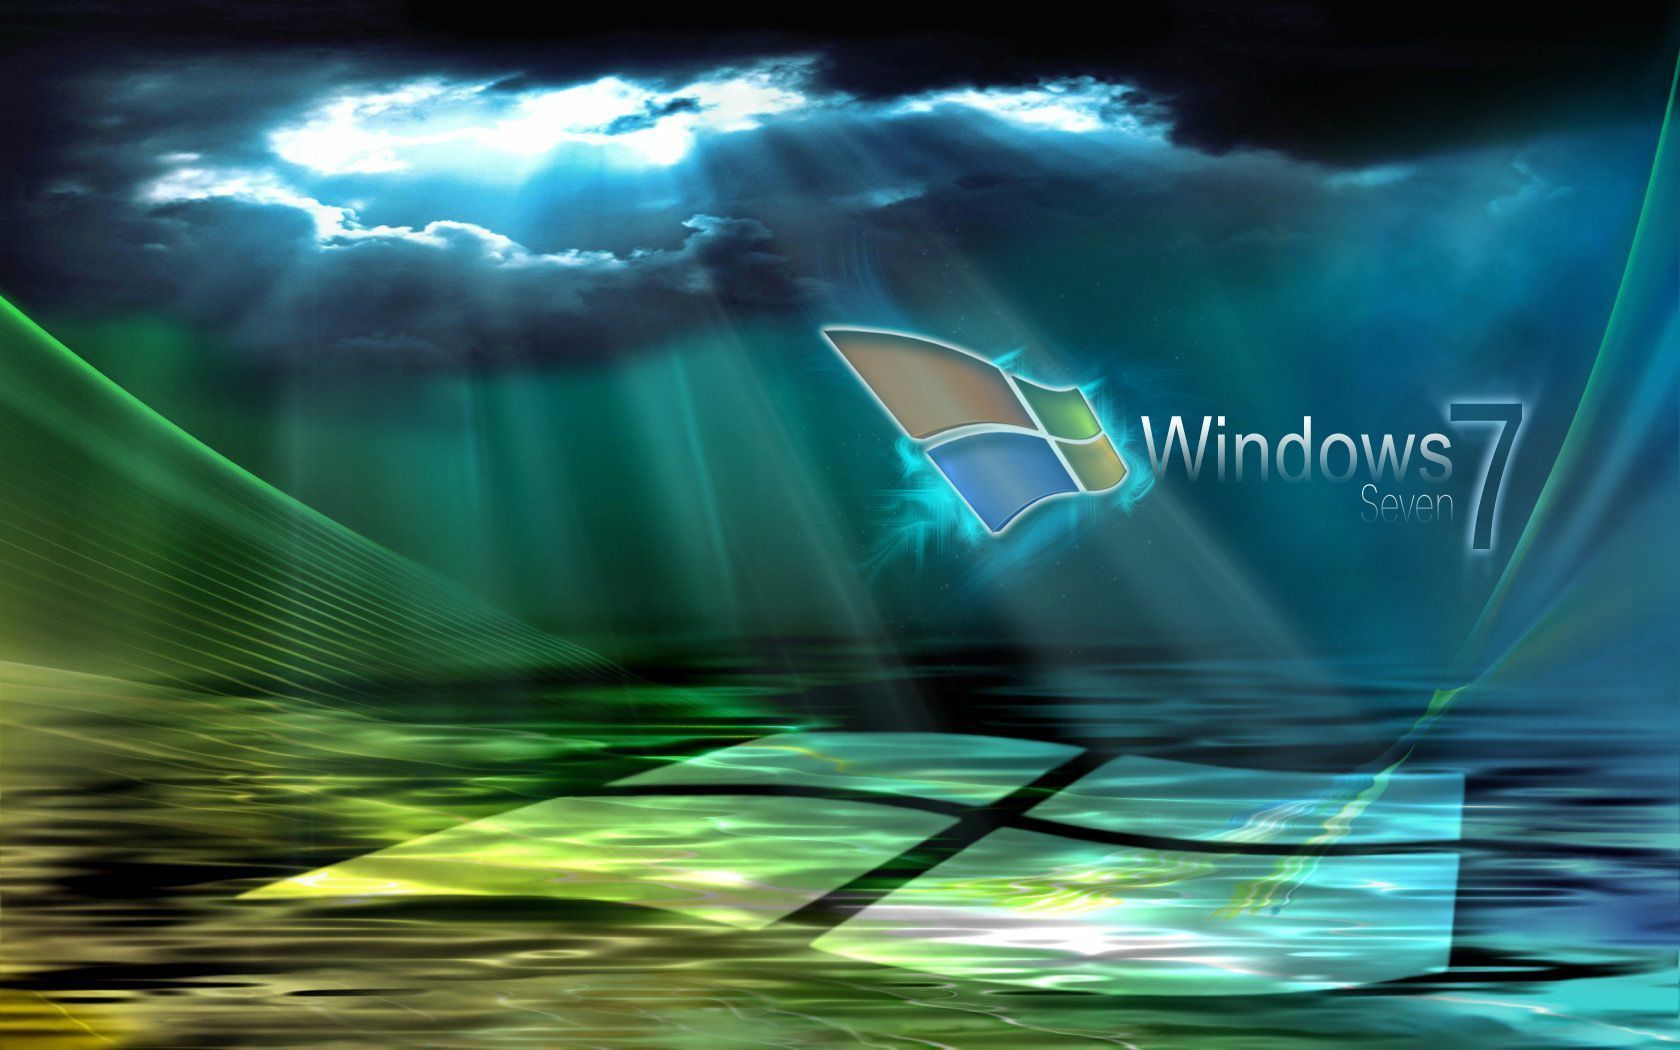 Windows 7 Wallpapers Hd Wallpapers Inn ImgStocks.com